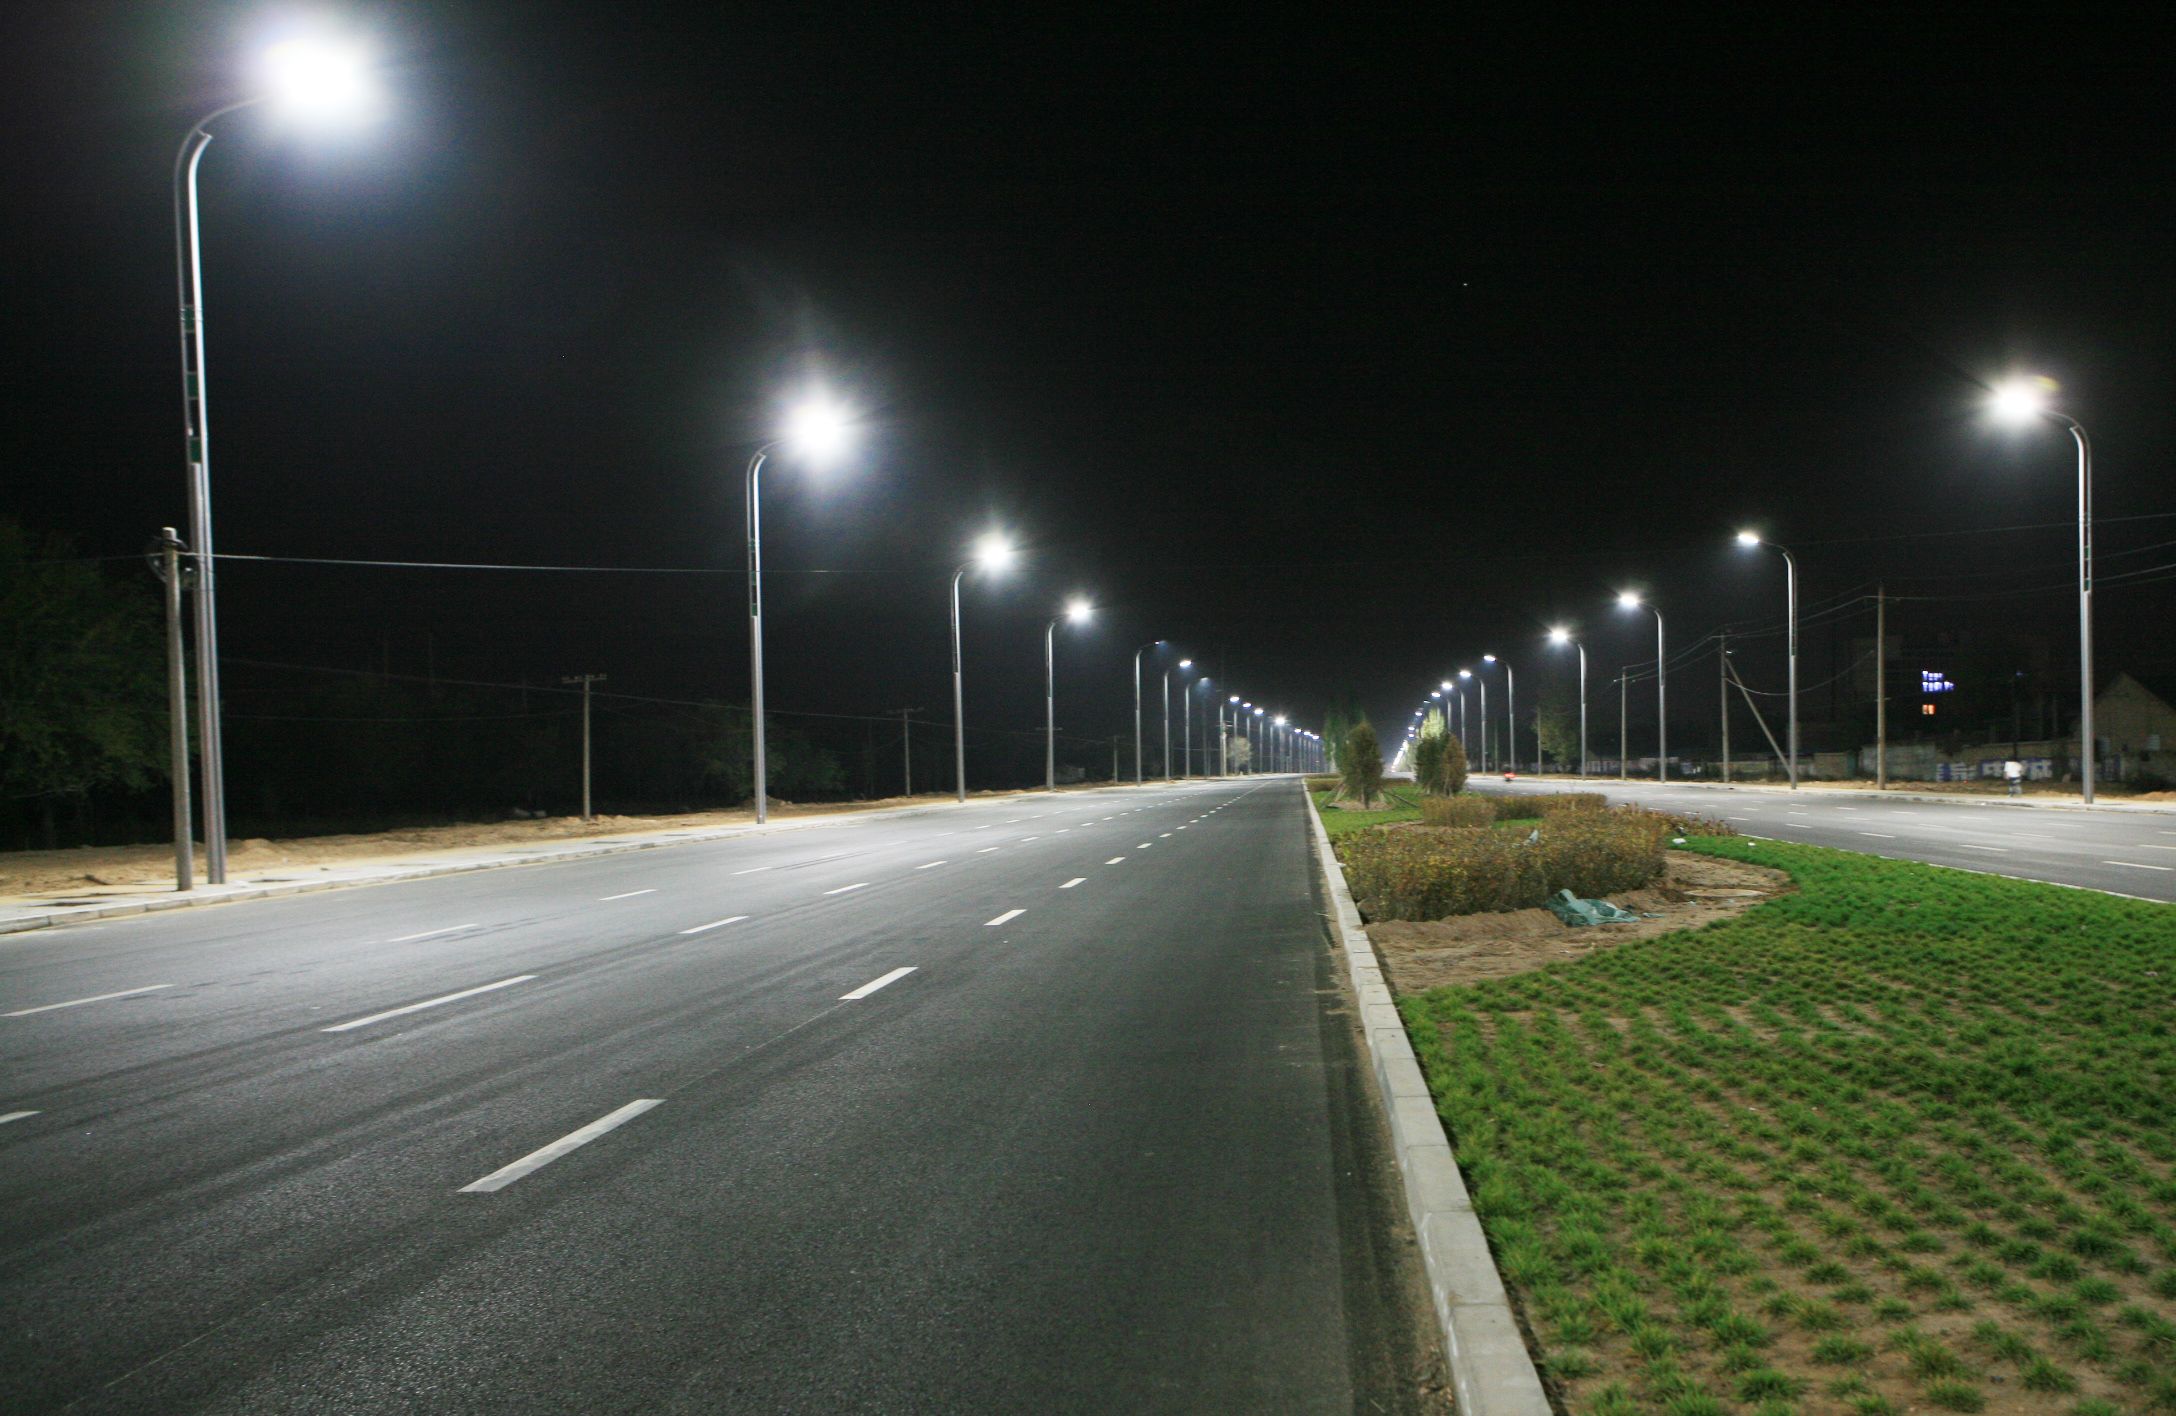 China street lights manufacturers | LED Street Light | Pinterest ...